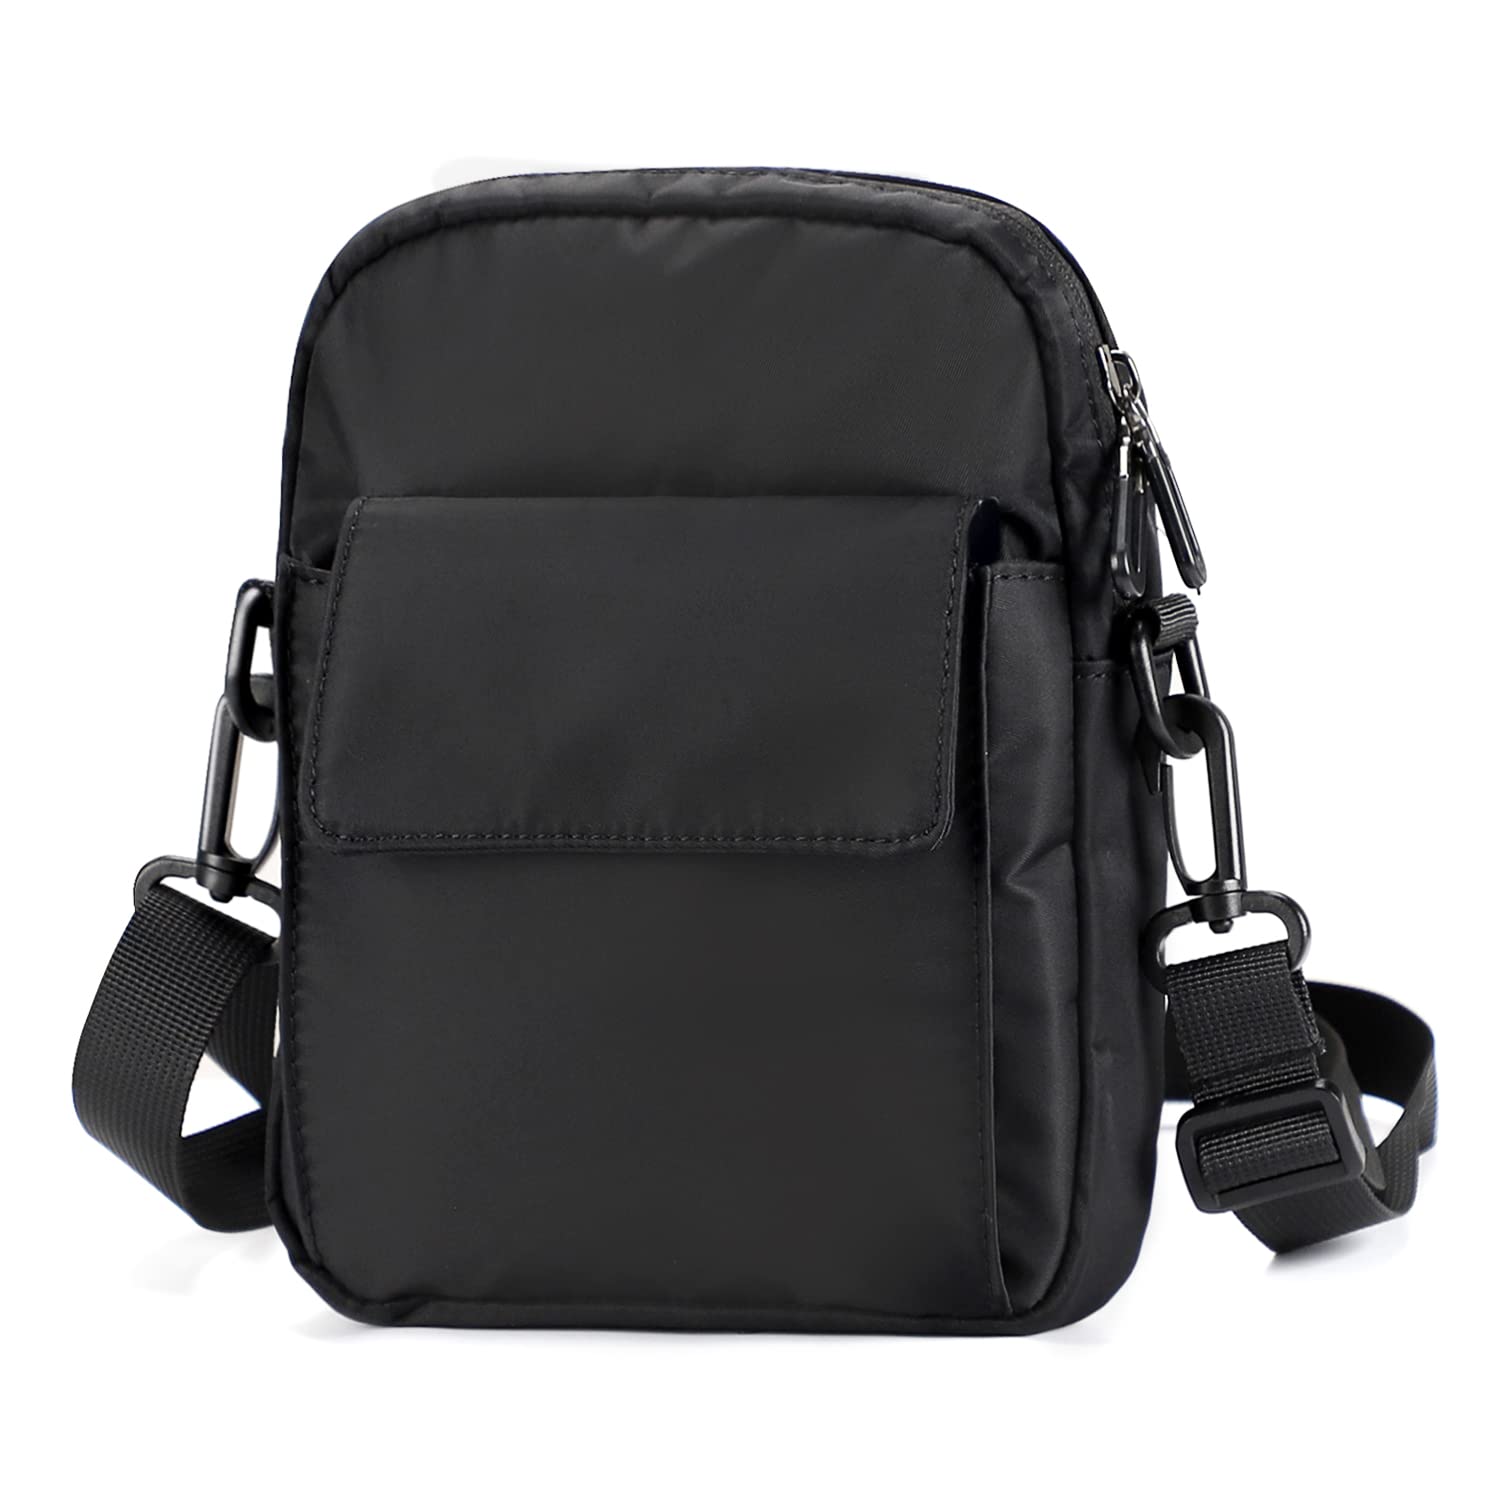 Travelon Crossbody Travel Purse Bag Black Adjustable Strap Nylon | eBay